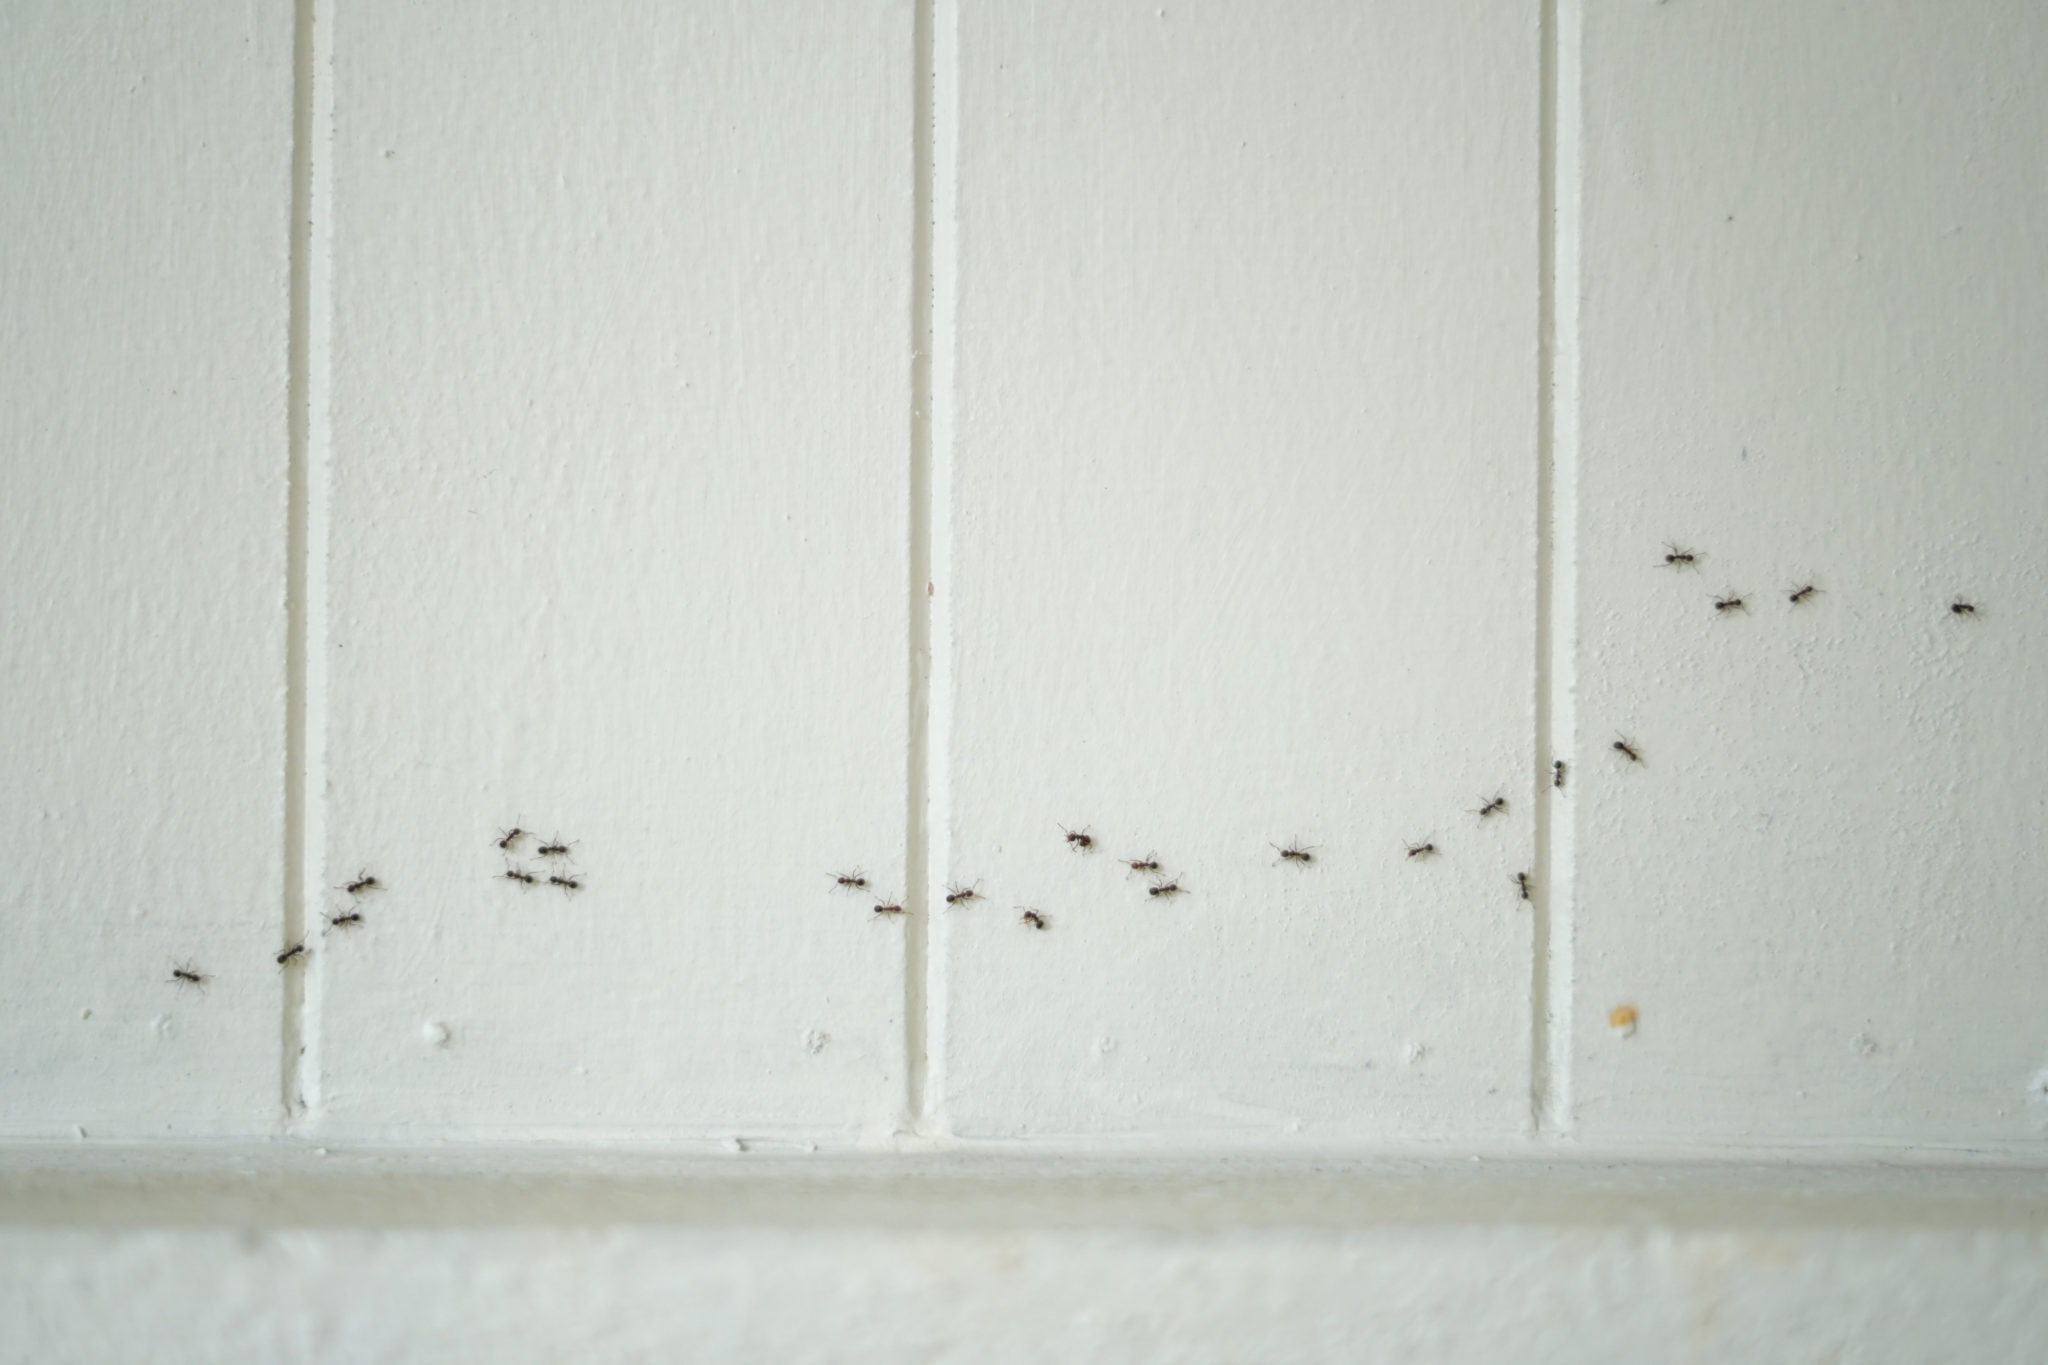 Ants infestation in Melbourne home